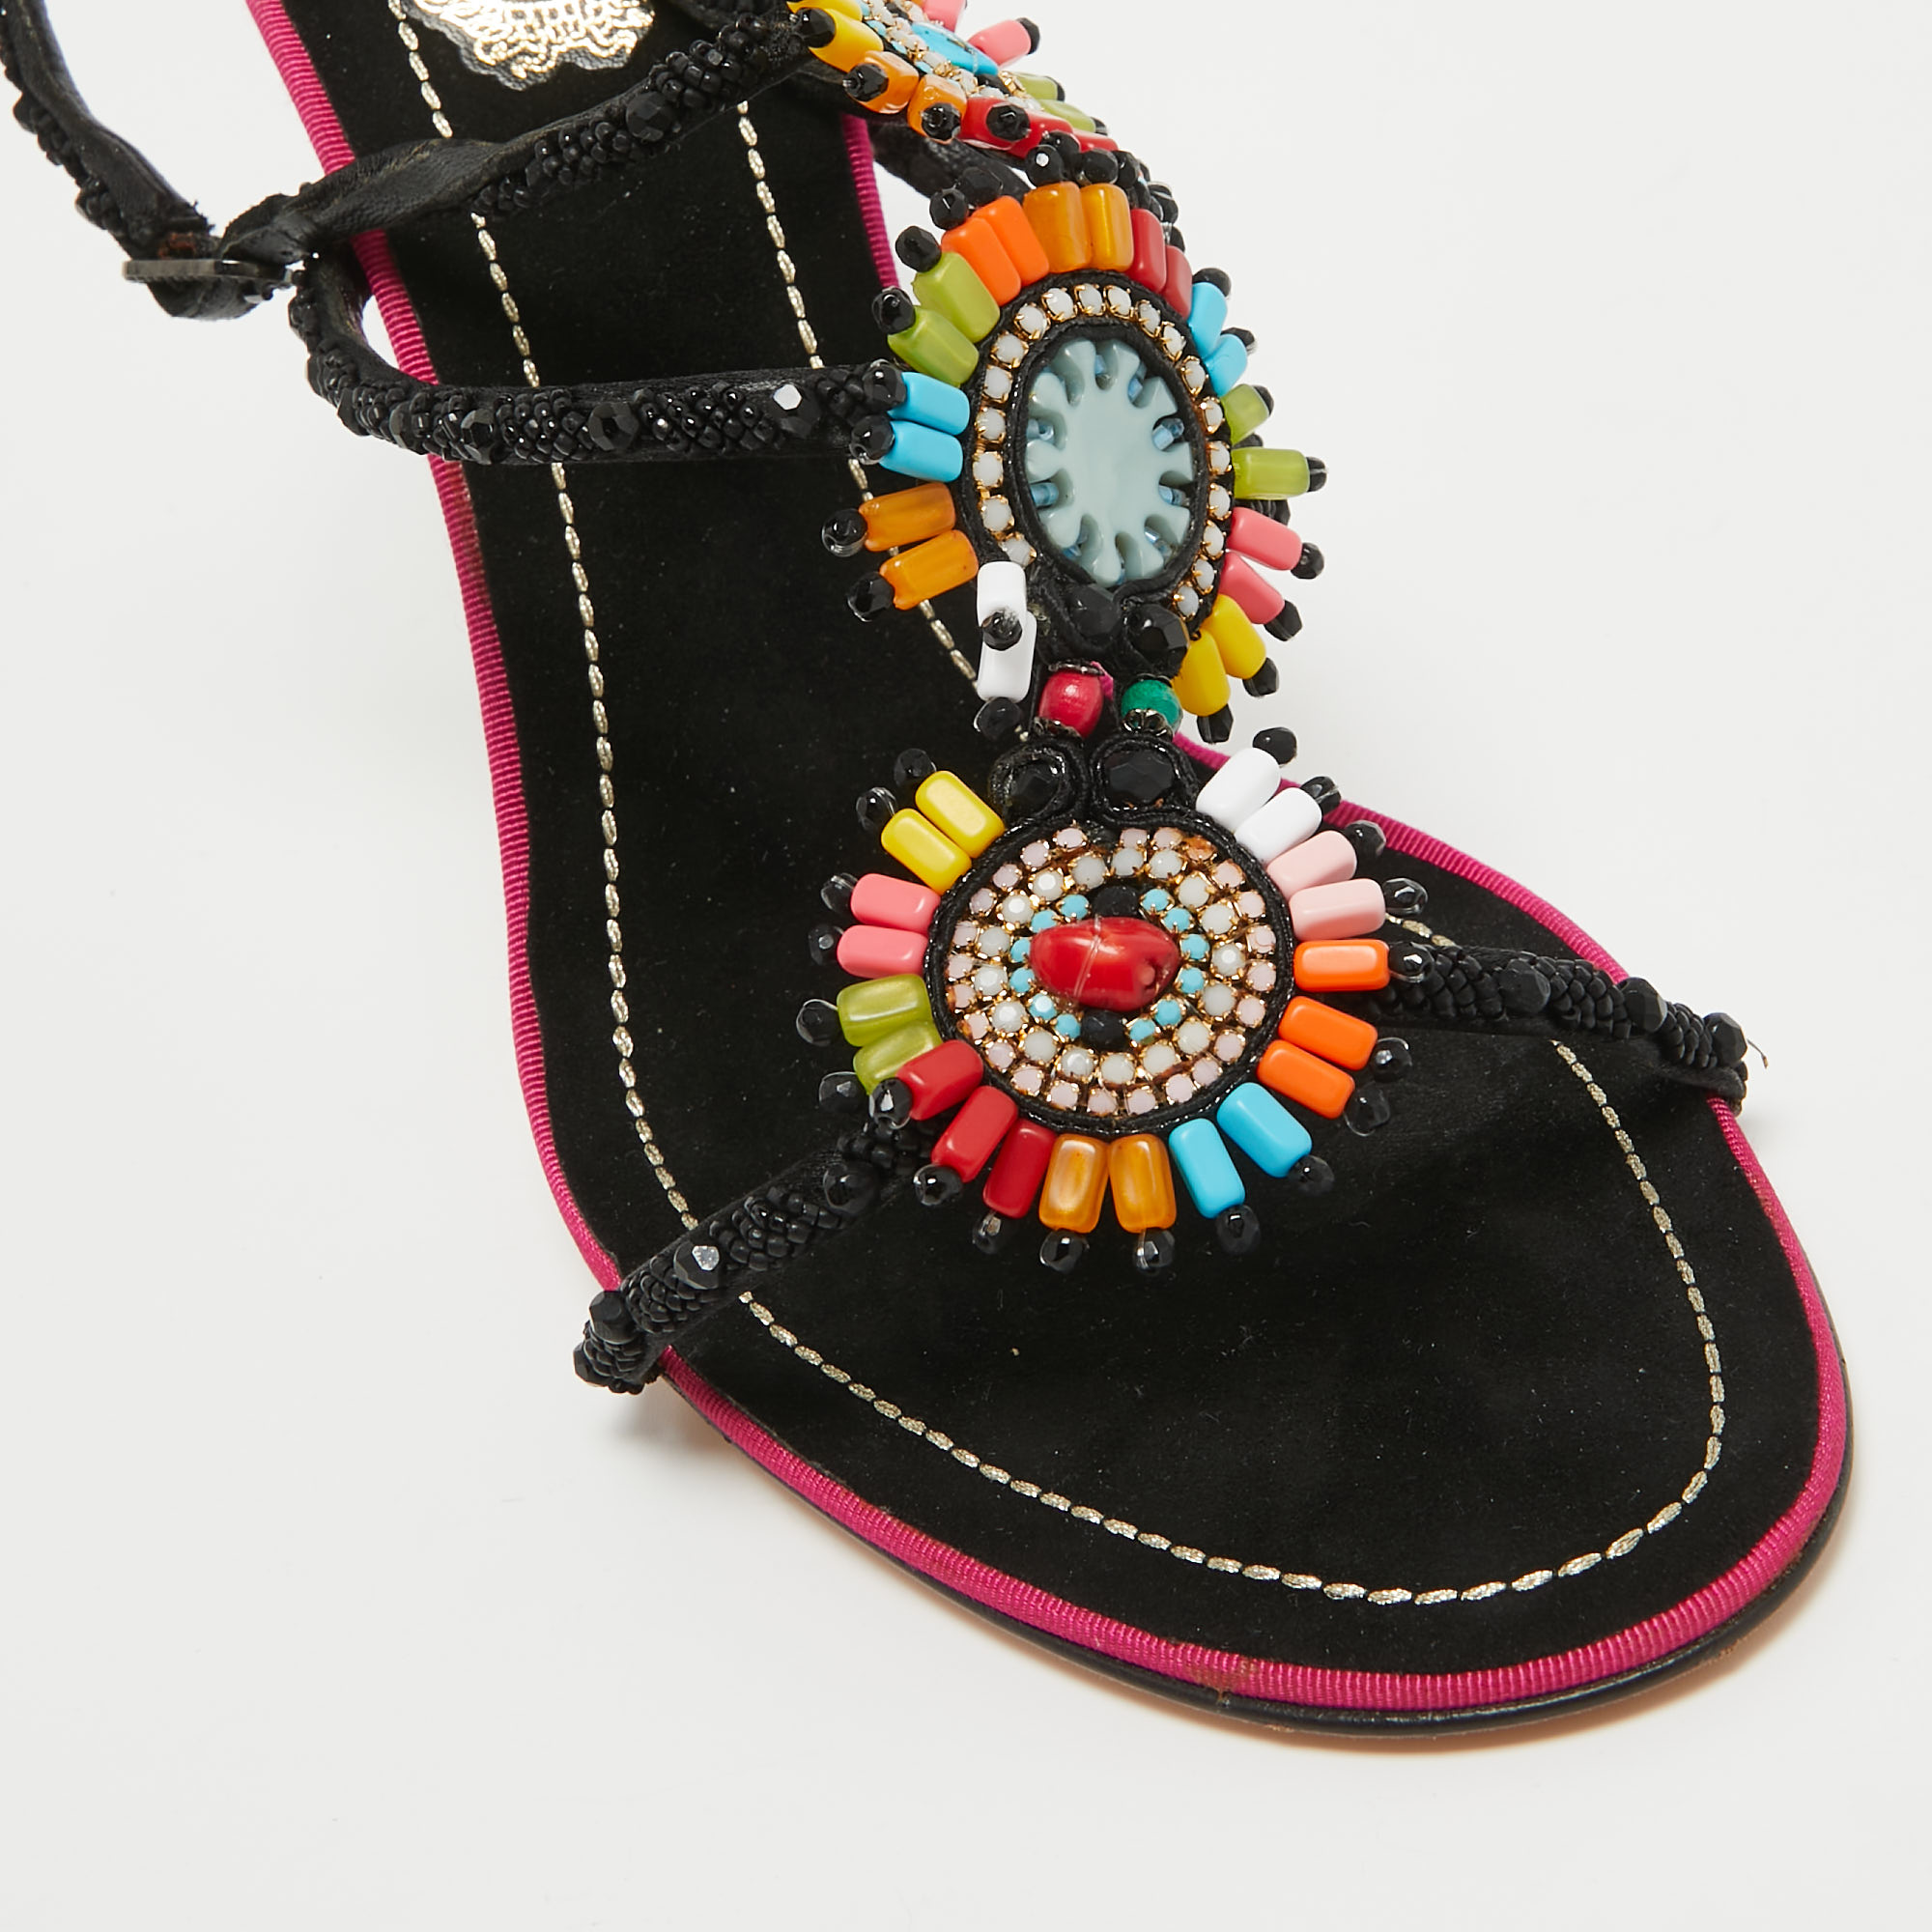 René Caovilla Black Satin Embellished Slingback Sandals Size 39